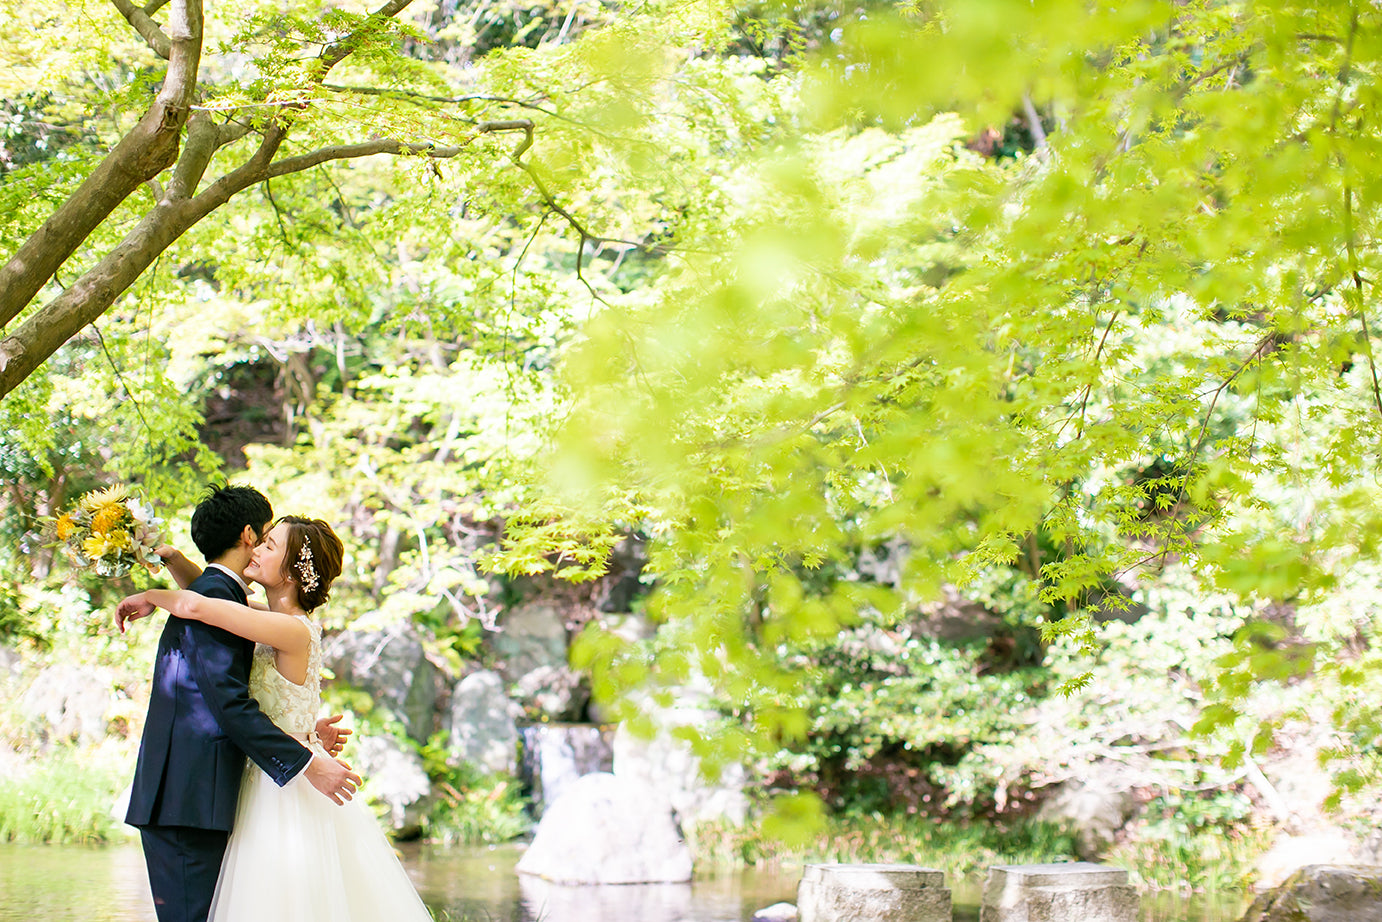 大阪/万博公園 Pre-Wedding Photo Package in Osaka